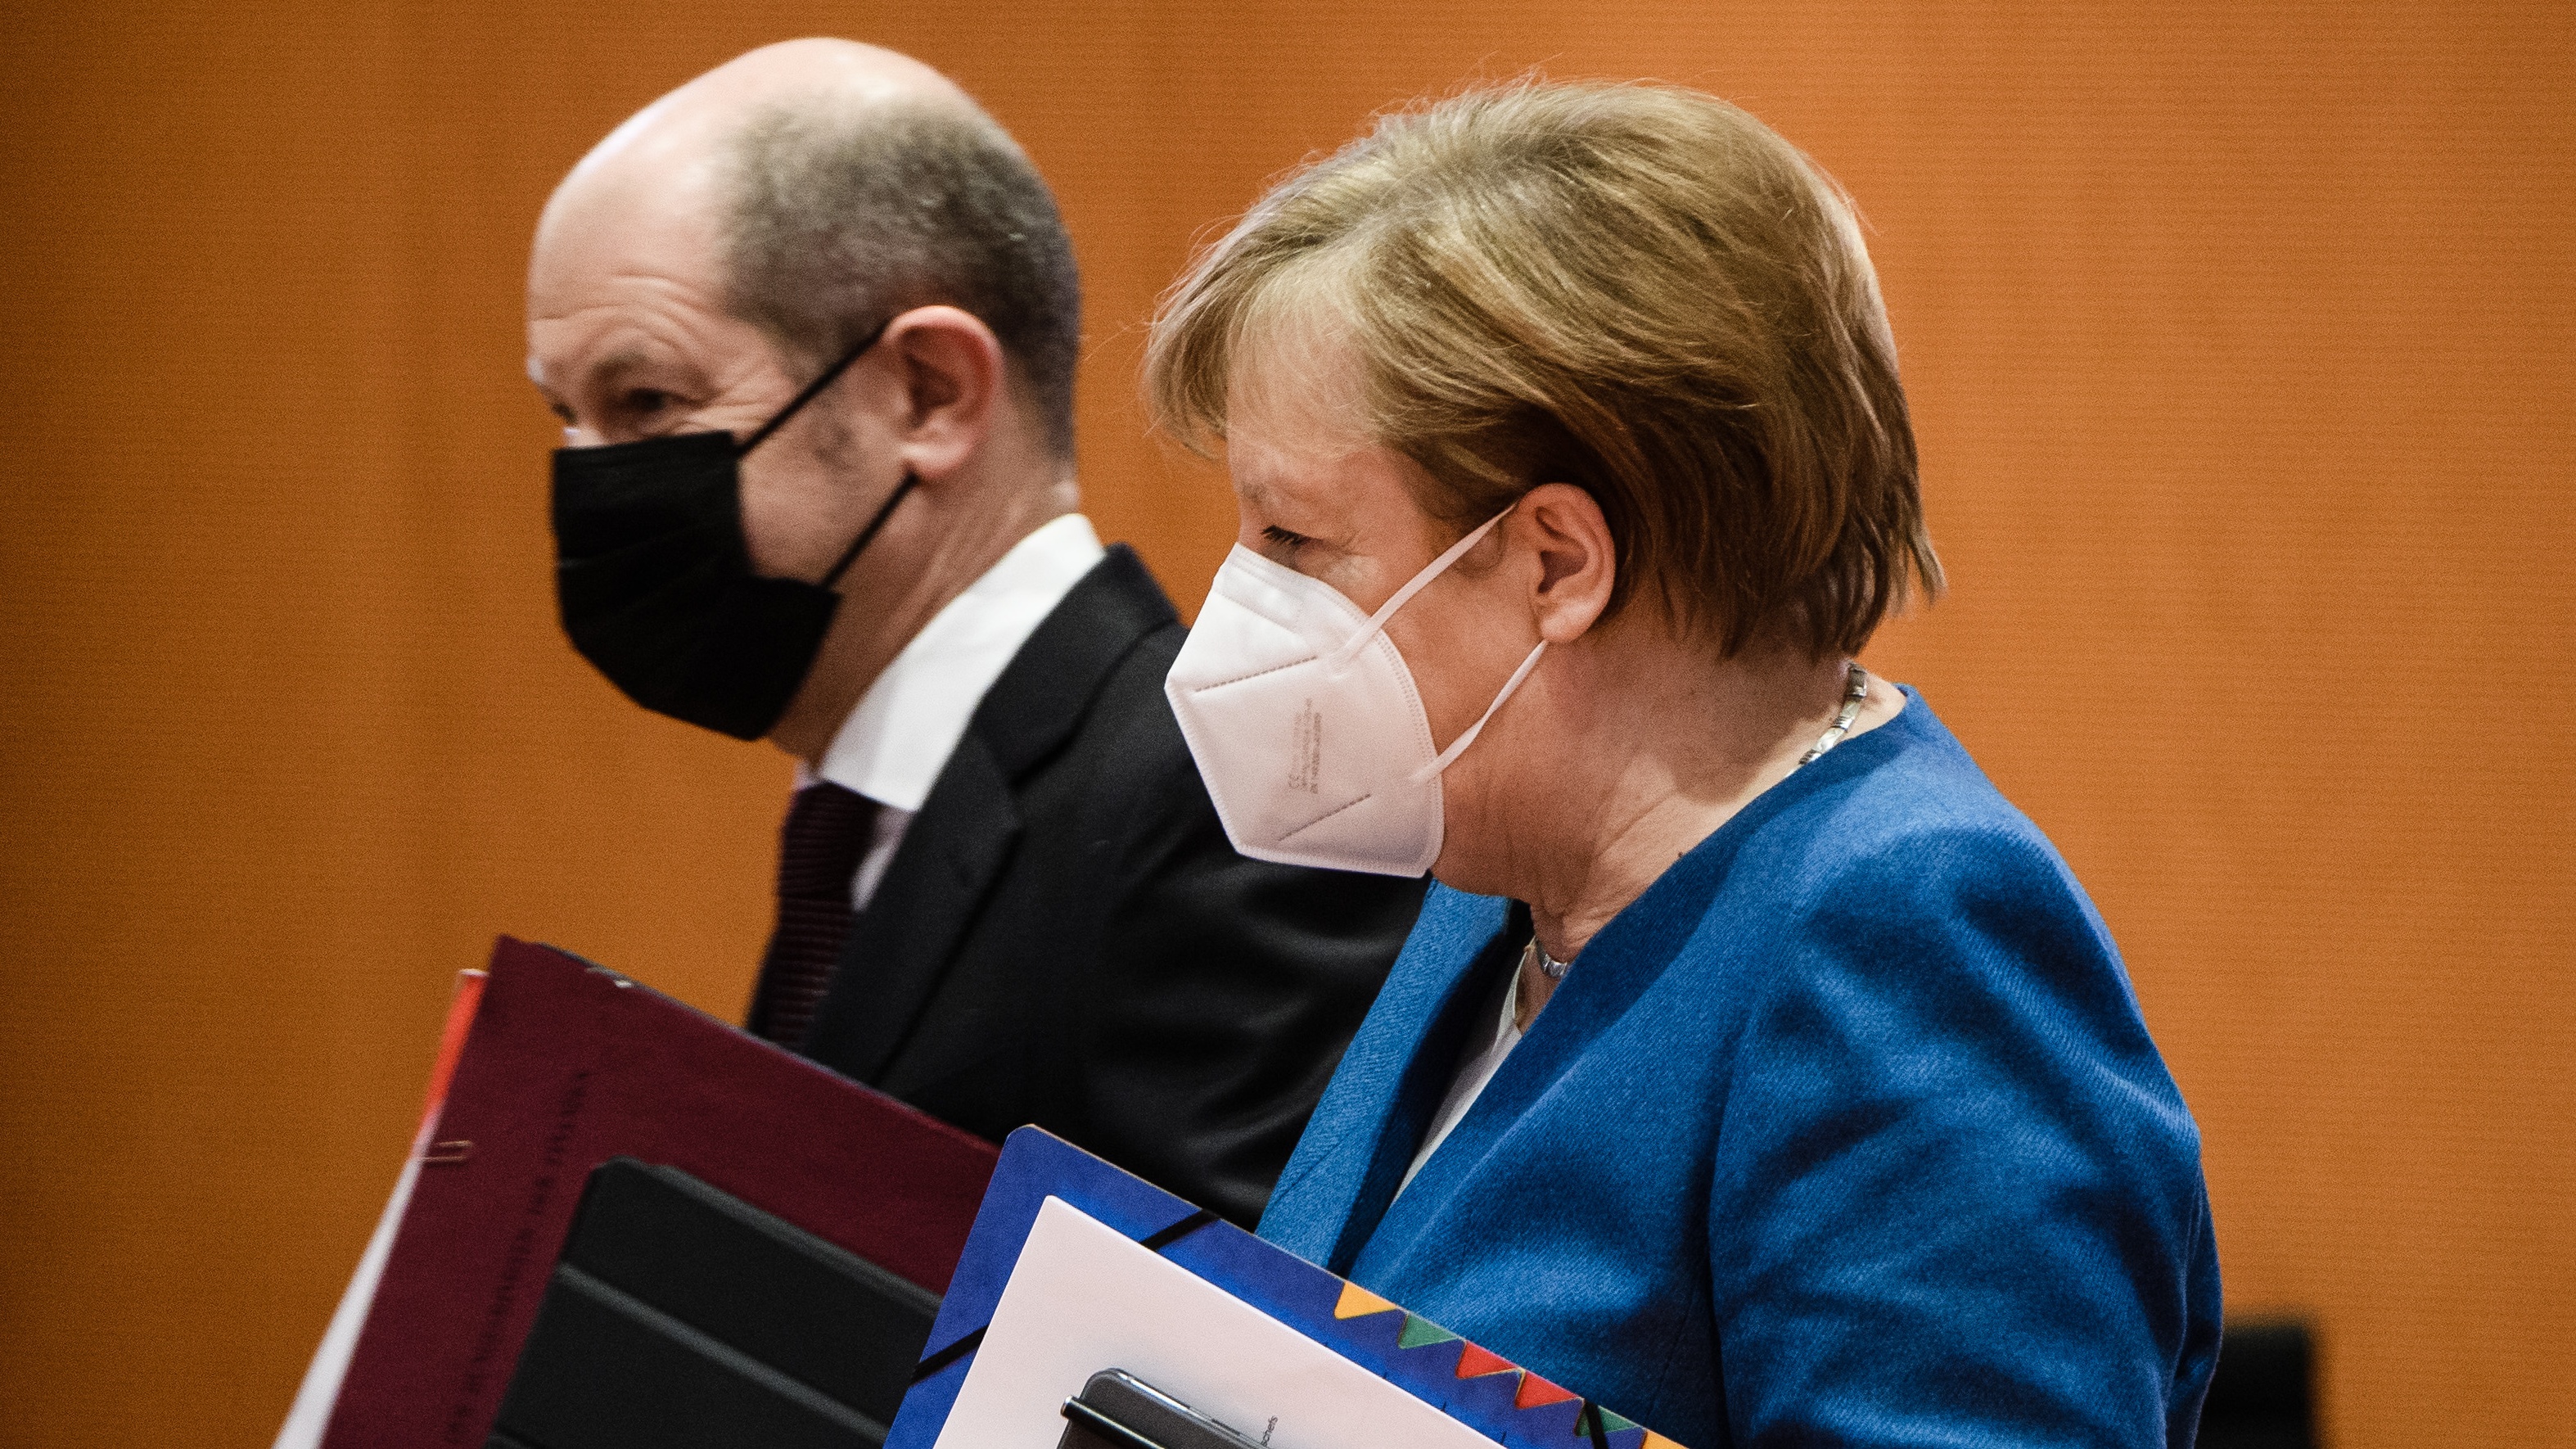 SPD leader Olaf Scholz with CDU Chancellor Angela Merkel